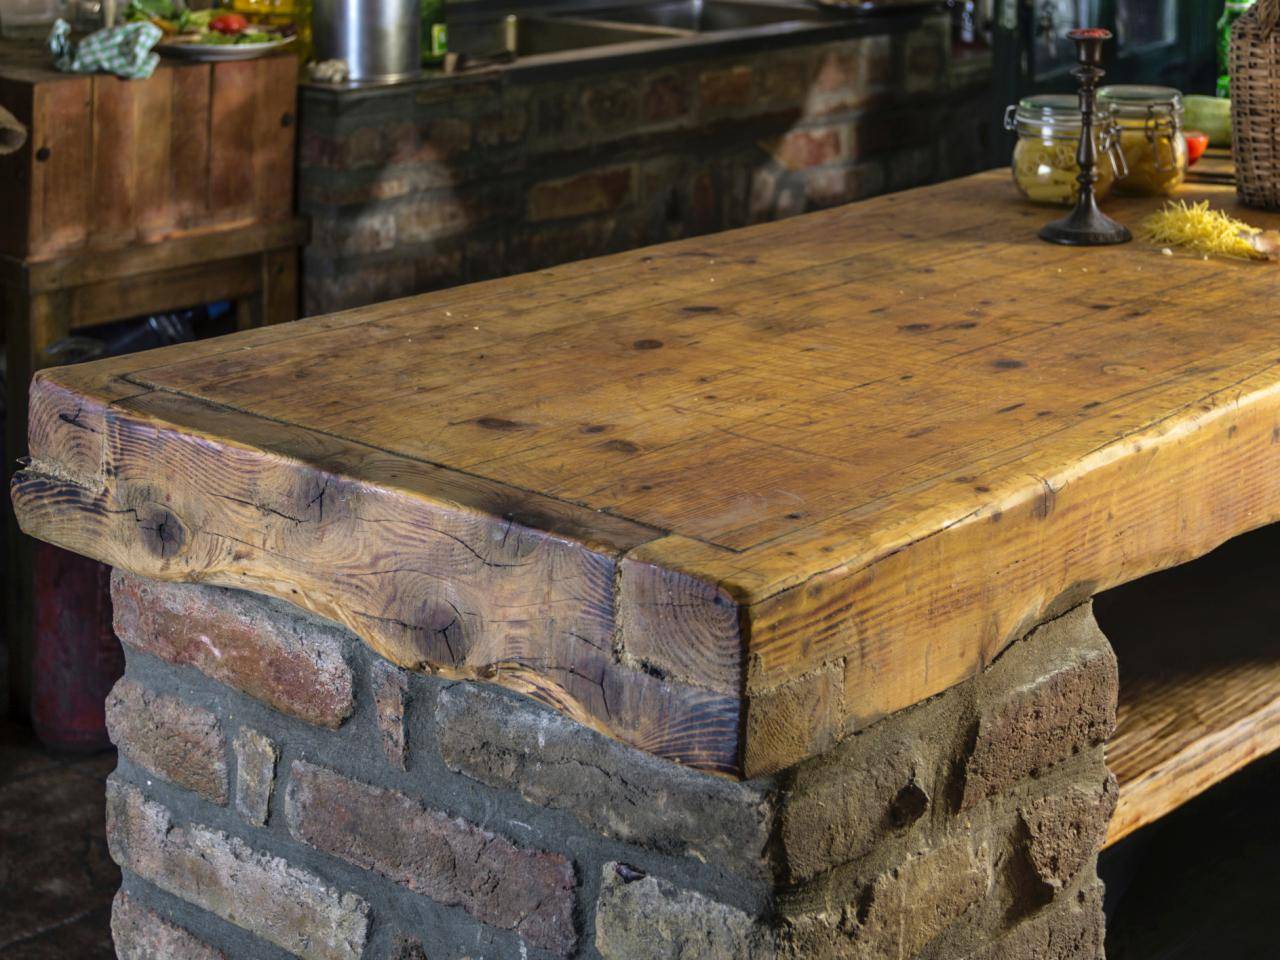 Wood countertop set on brick